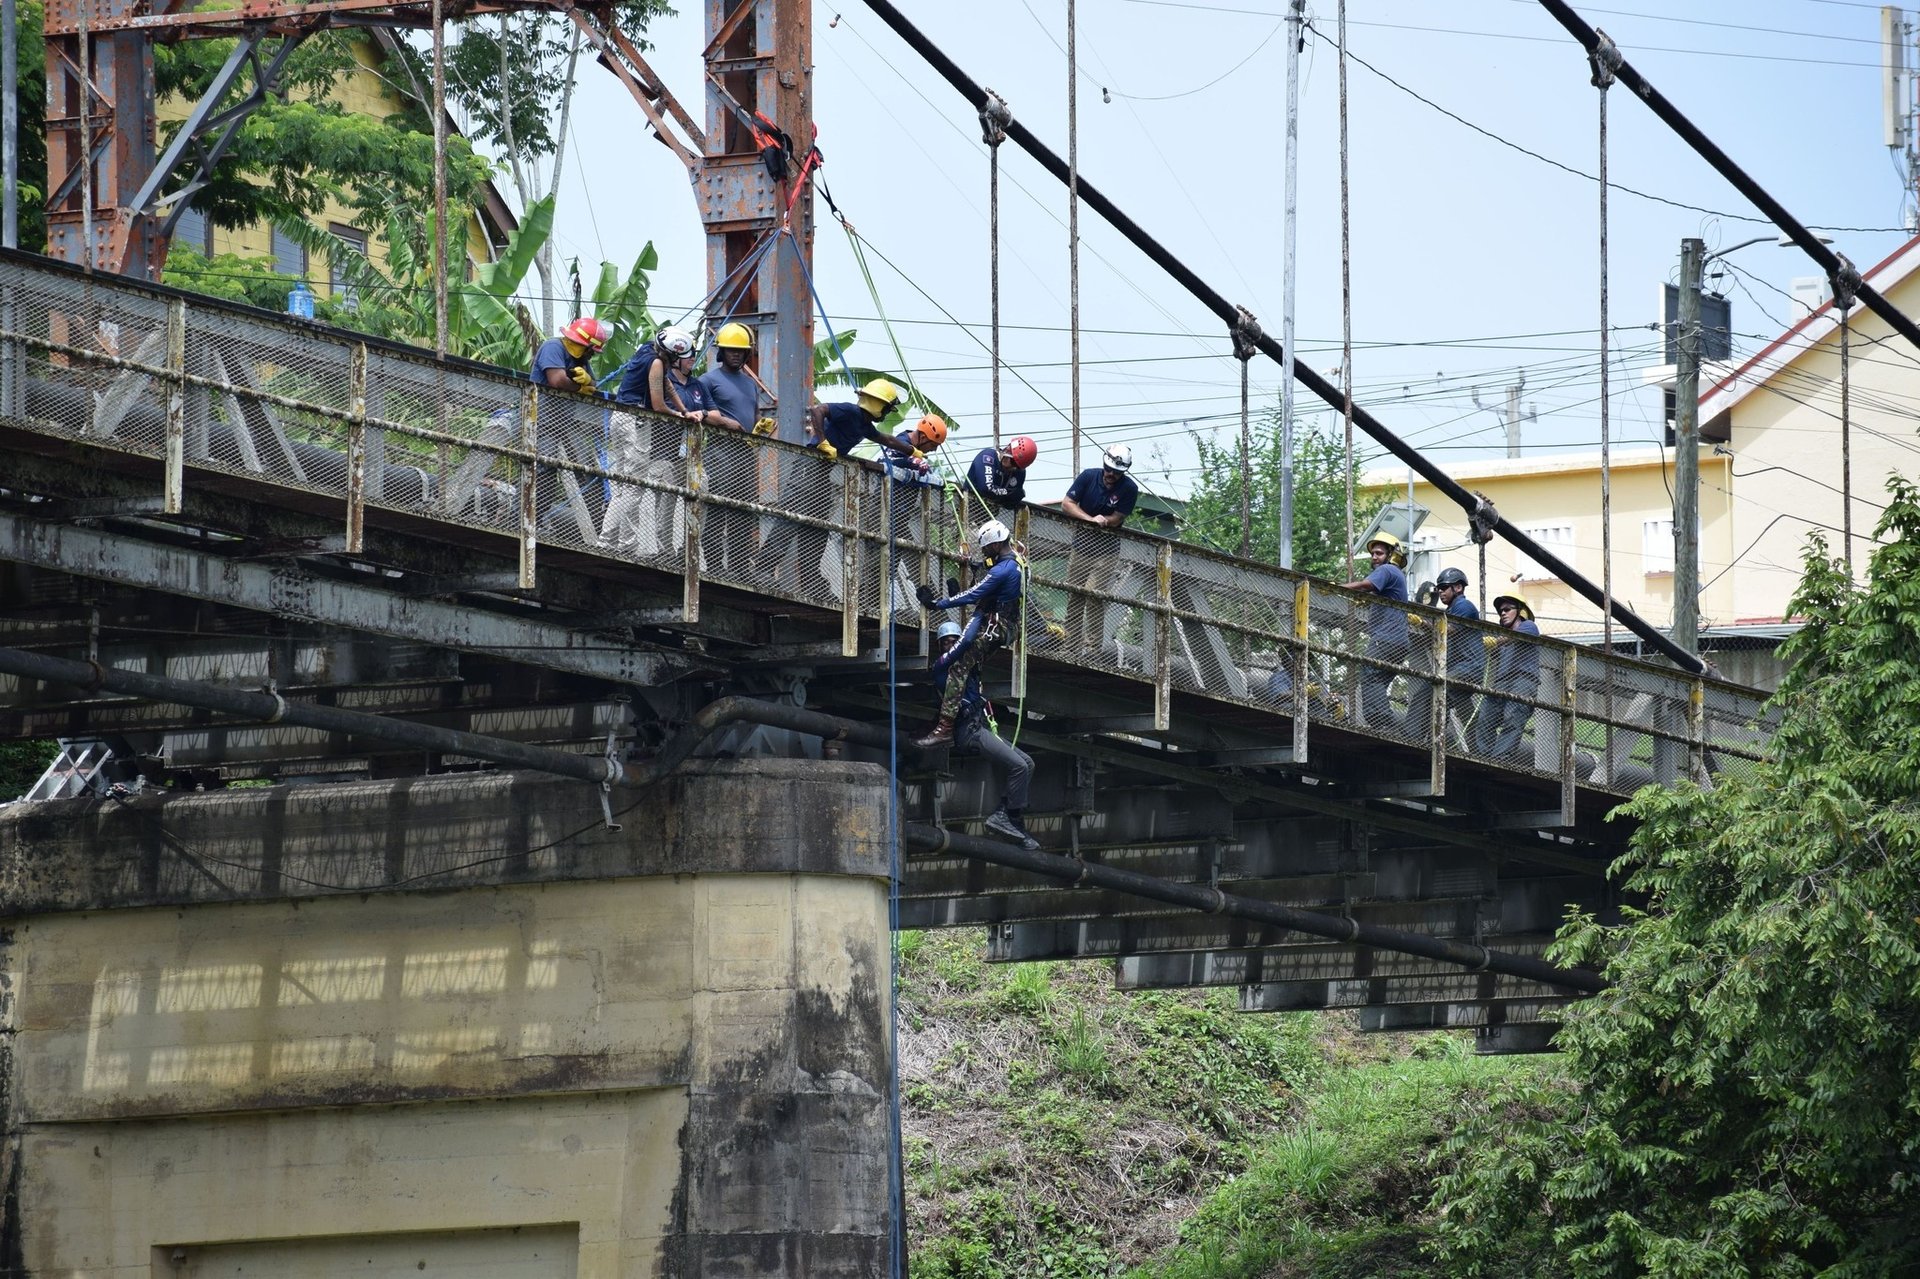 Trek Medics International Photo of ten people on a bridge helping two people hanging on the bridge